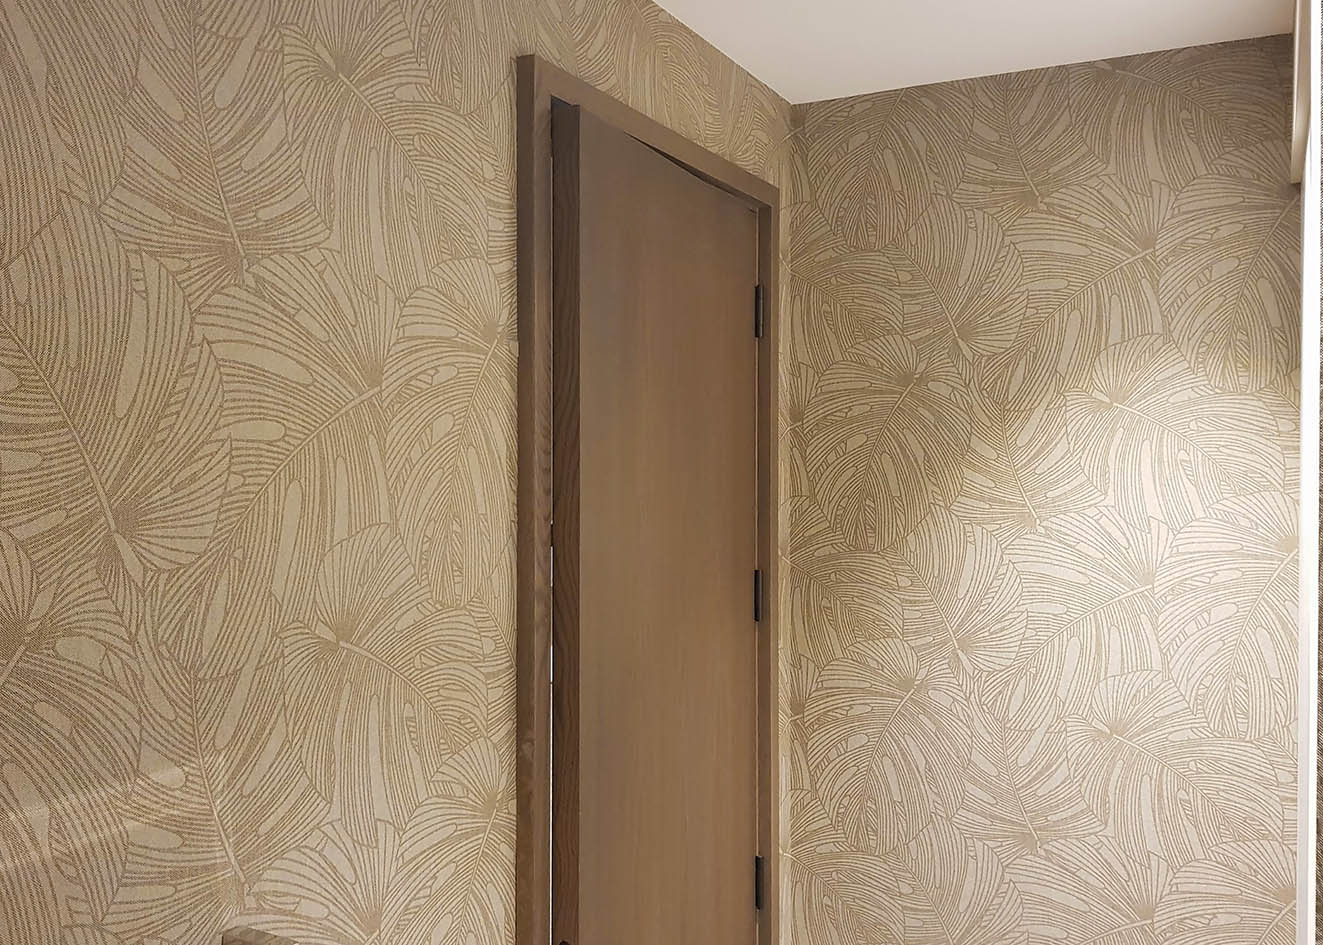 Arte Flamant wallpaper in beige leaves installed in a bathroom.